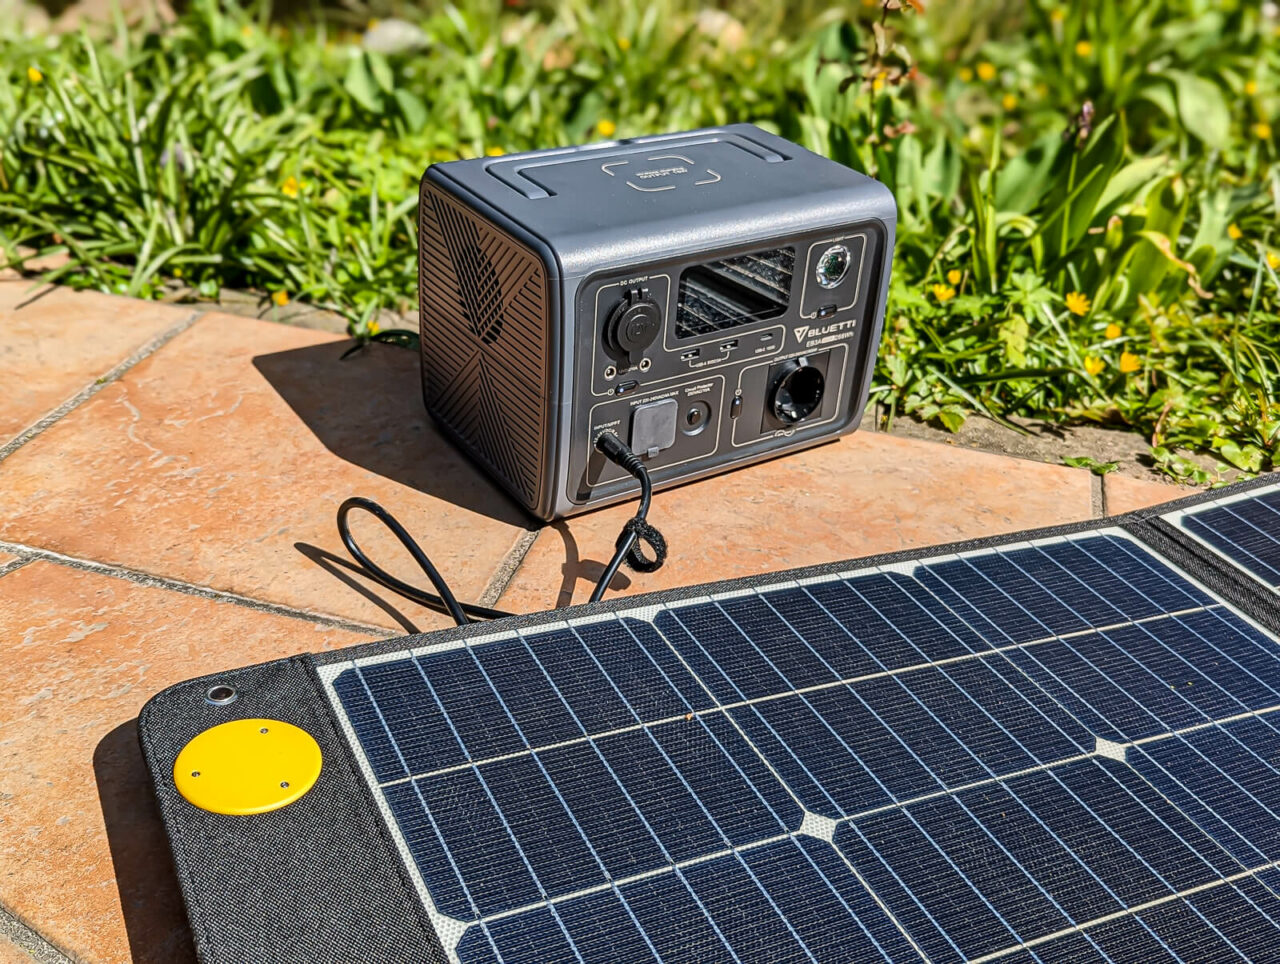 Togo Power 100w Advance Solar Panel Test, Solarzellen, Material, Monokristallin, Sonne, Powerstation, Bluetti Eb3a